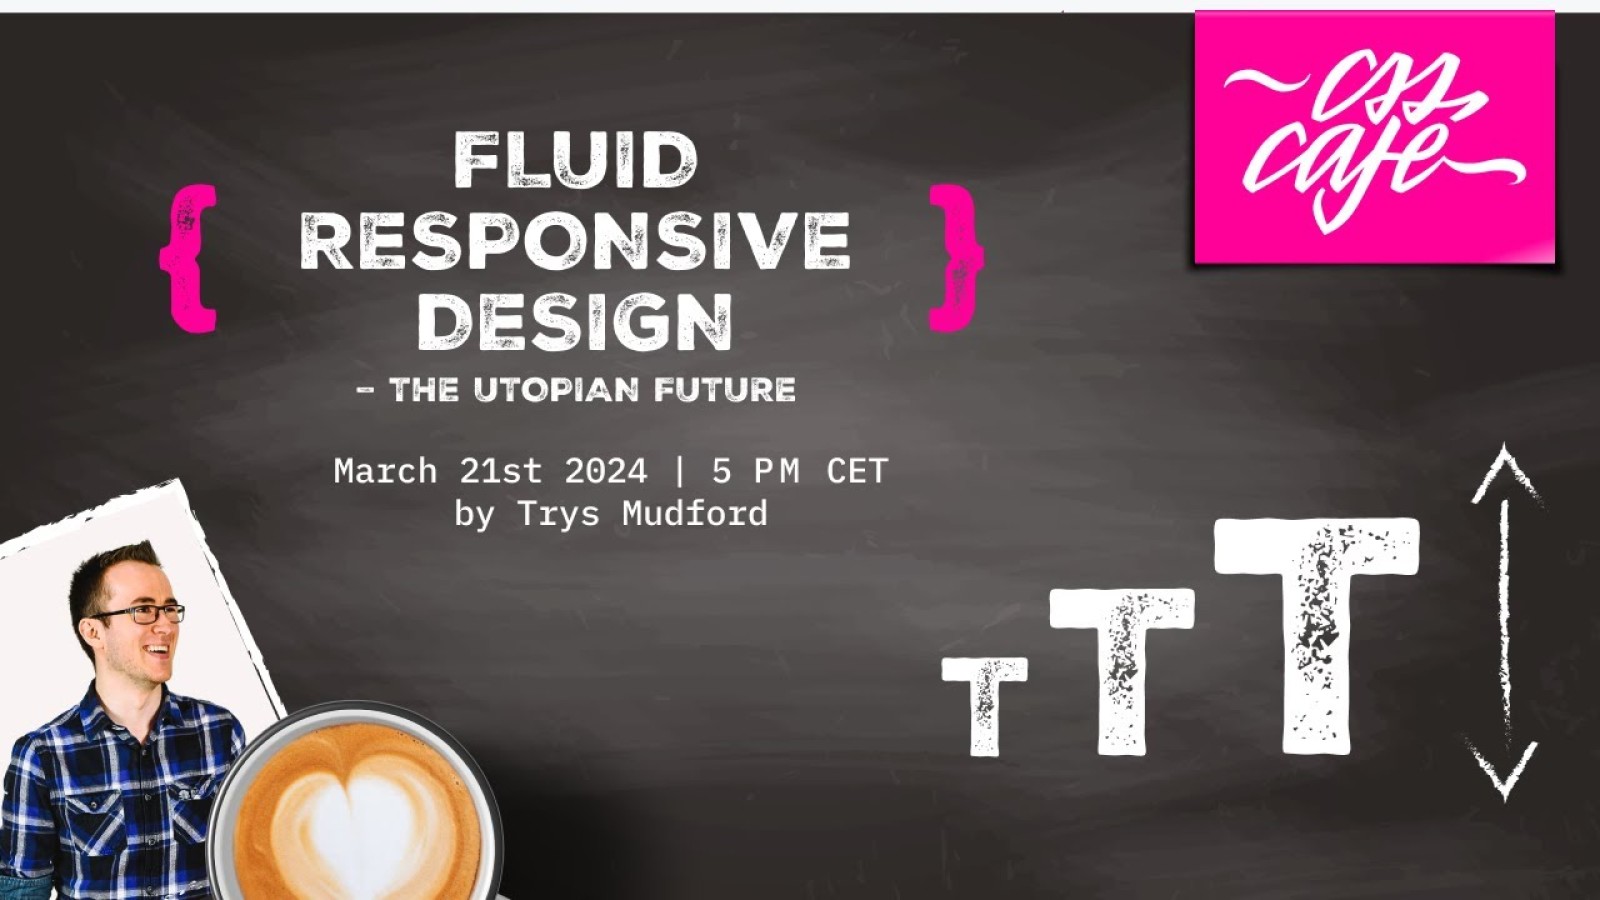 Fluid Responsive Design - The Utopian Future?